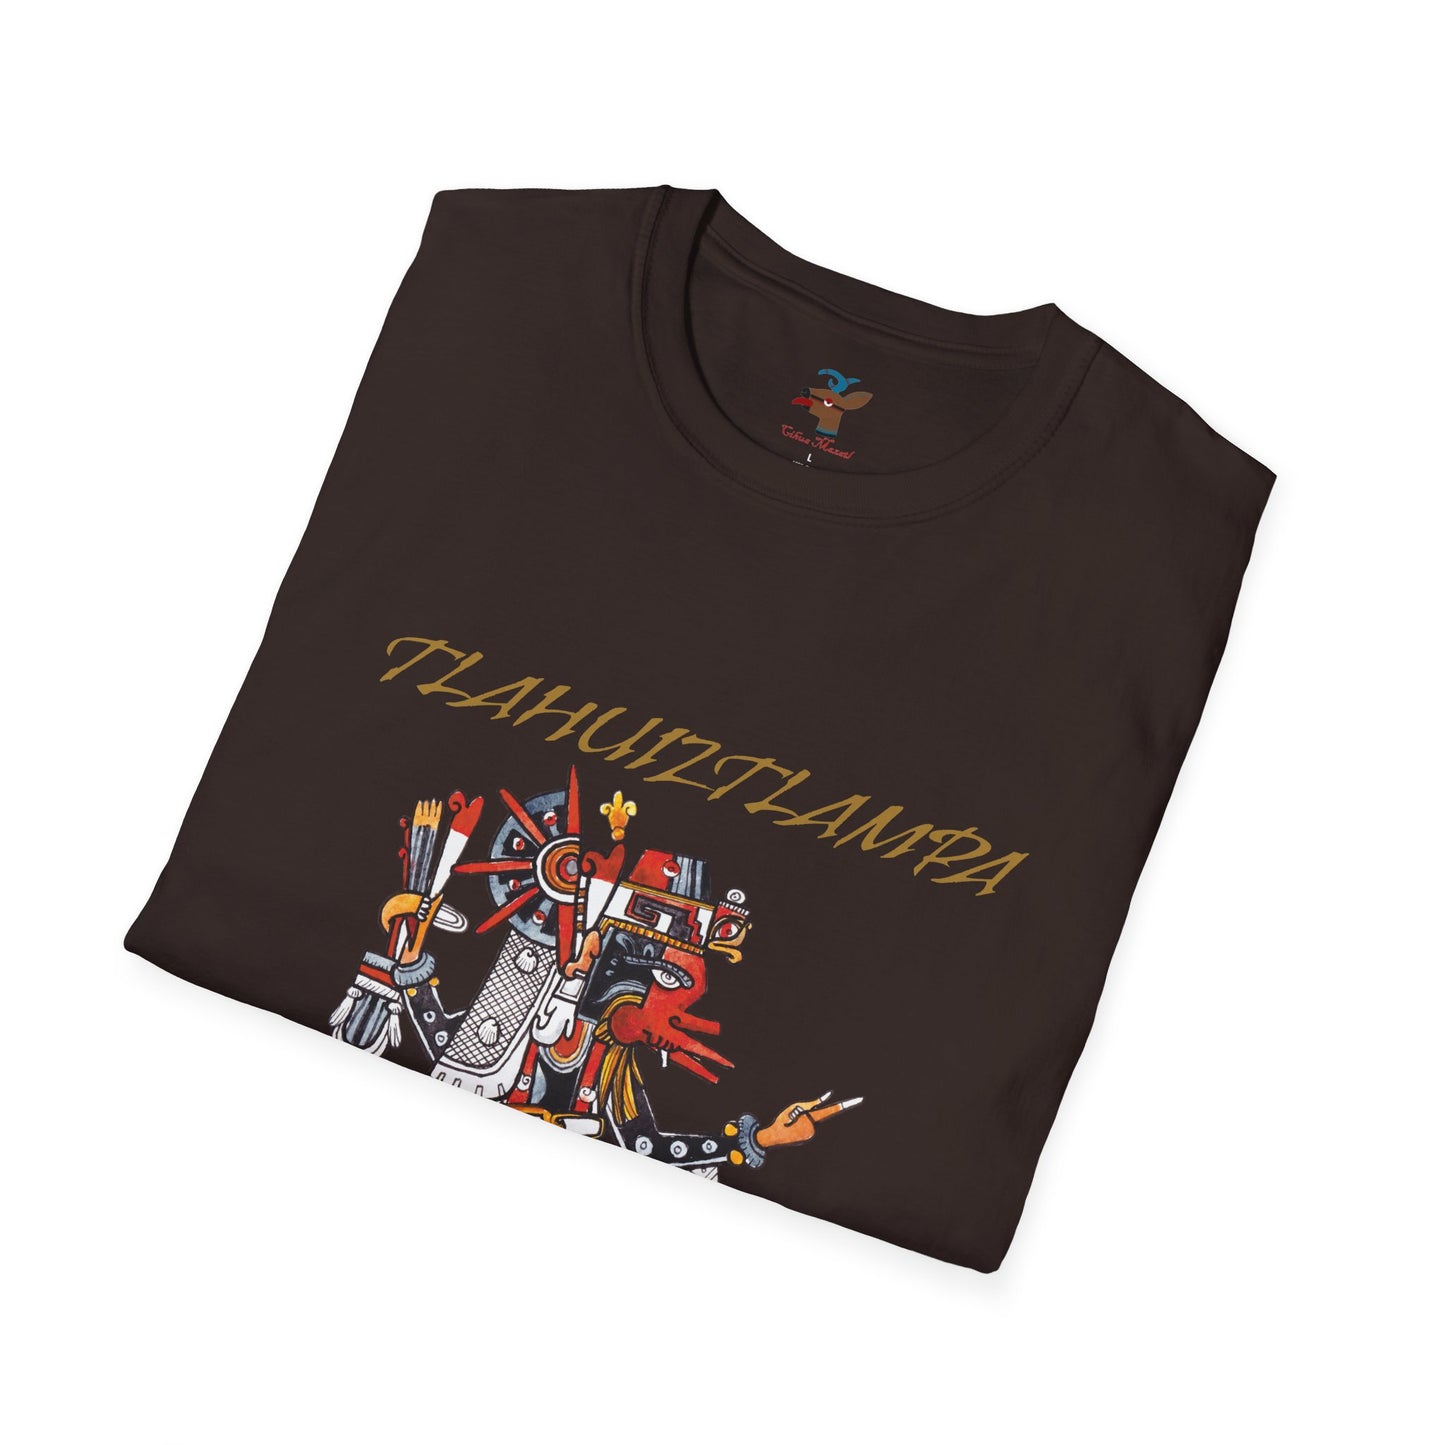 Tlahuiztlampa Quetzalcoatl Unisex Softstyle T-Shirt| east direction| aztec dance| danza azteca| apparel| clothing| tshirt